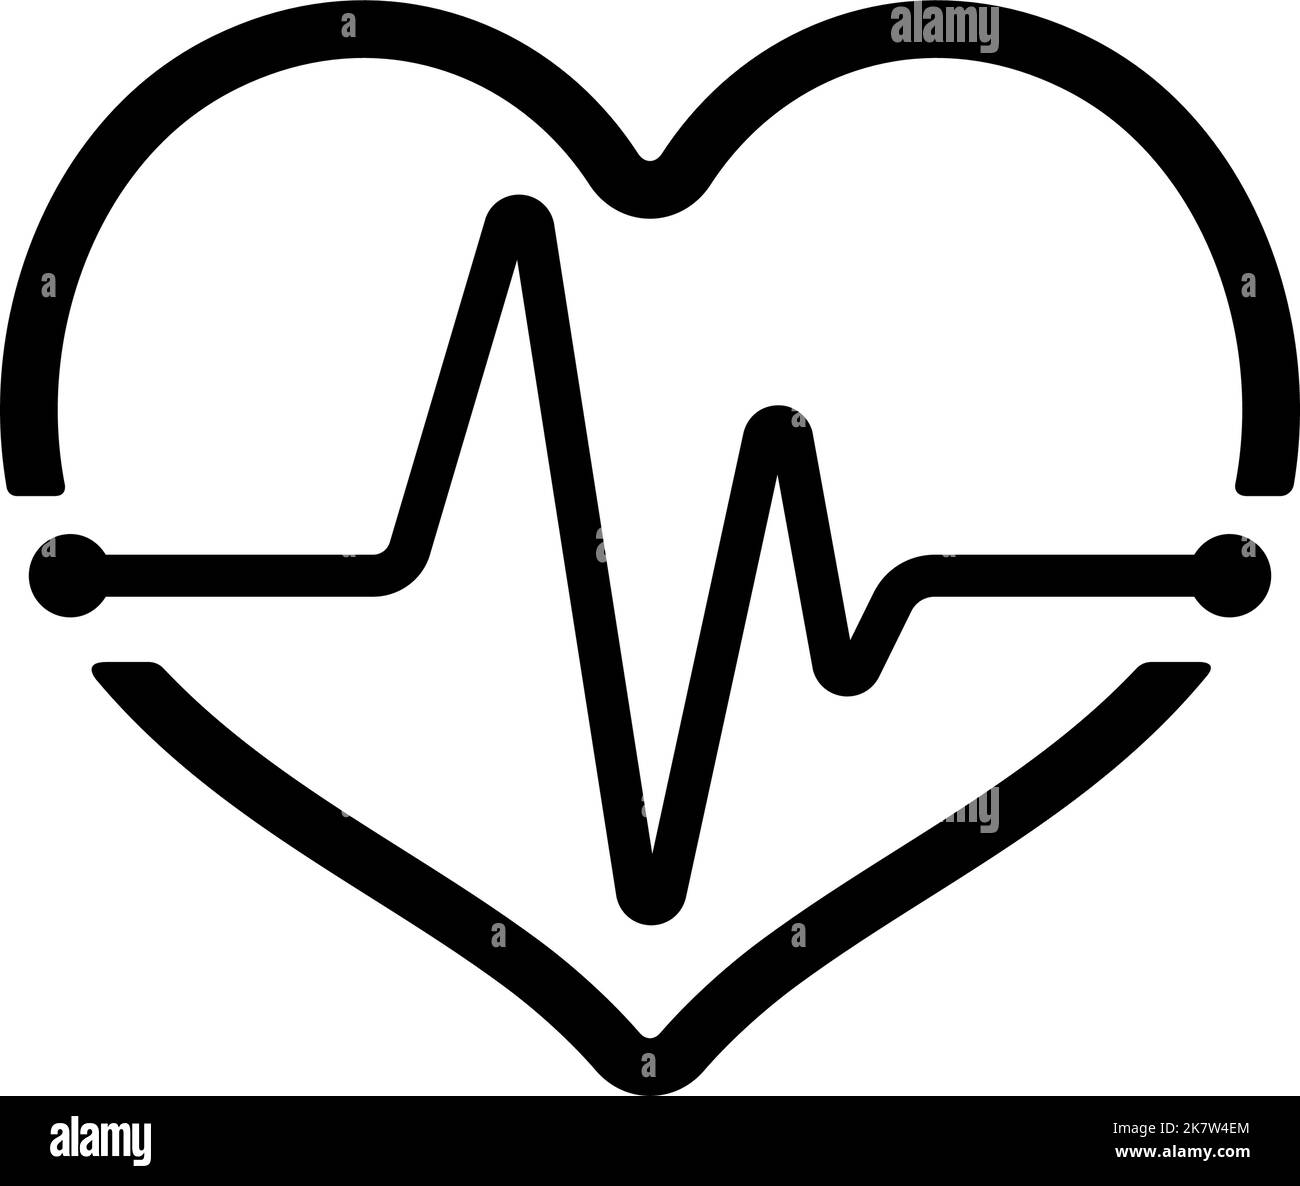 Image Details IST_34911_00065 - Heart cardiogram. Heart icon vector. Love  symbol. Medicine emblem. Black silhouette. Vector illustration. Stock  image. EPS 10.. Heart cardiogram. Heart icon vector. Love symbol. Medicine  emblem. Black silhouette.